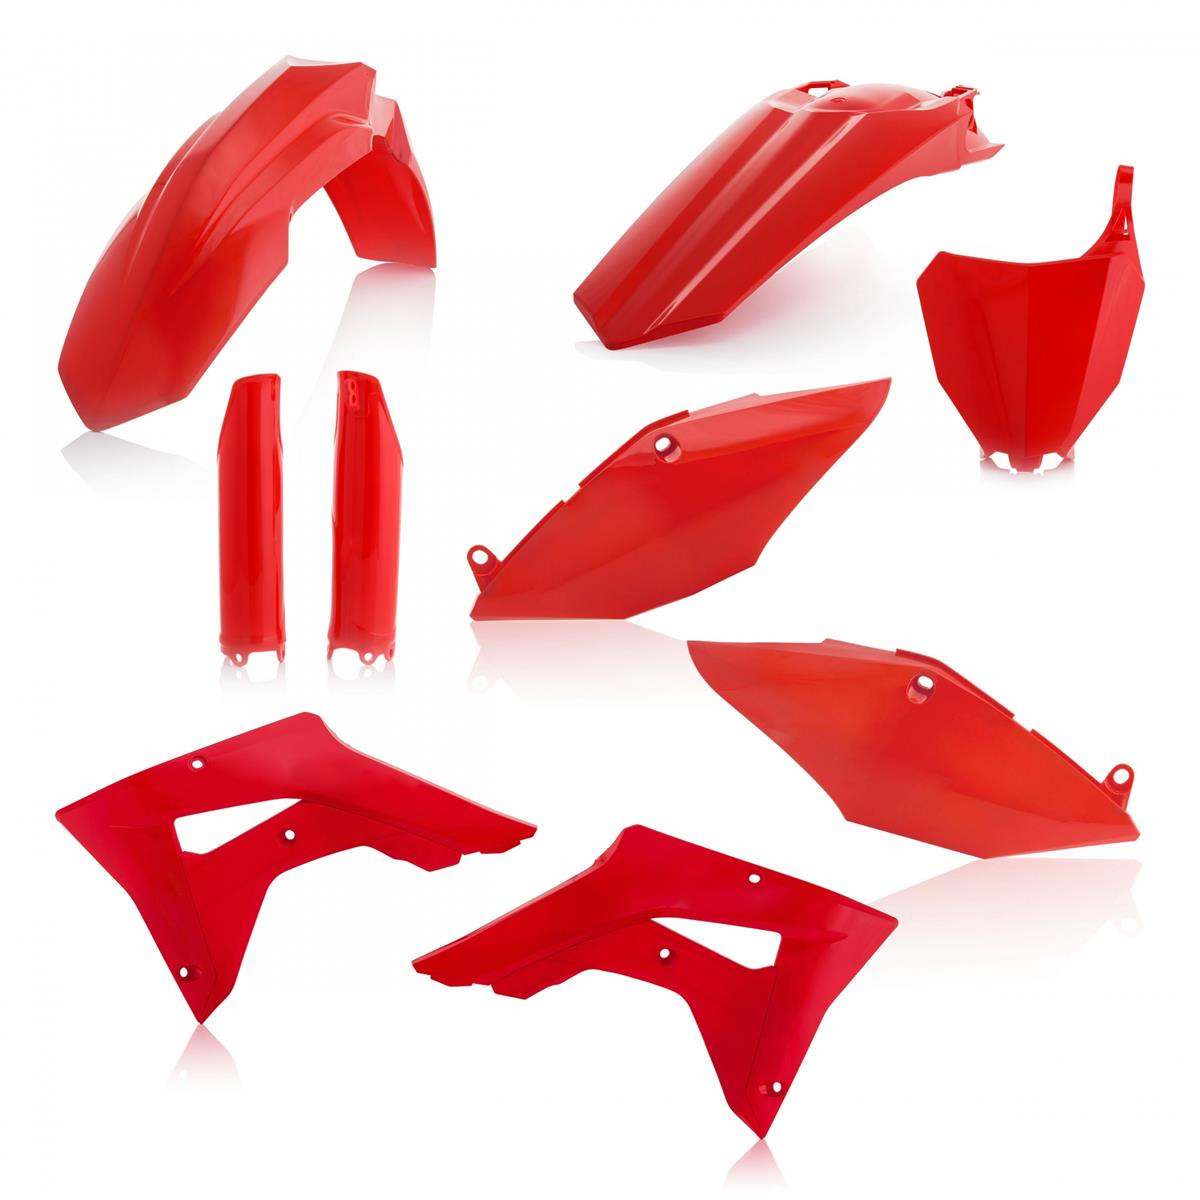 Acerbis Kit Plastiche completo Full-Kit Honda CRF 450 RX 17-21, Rosso